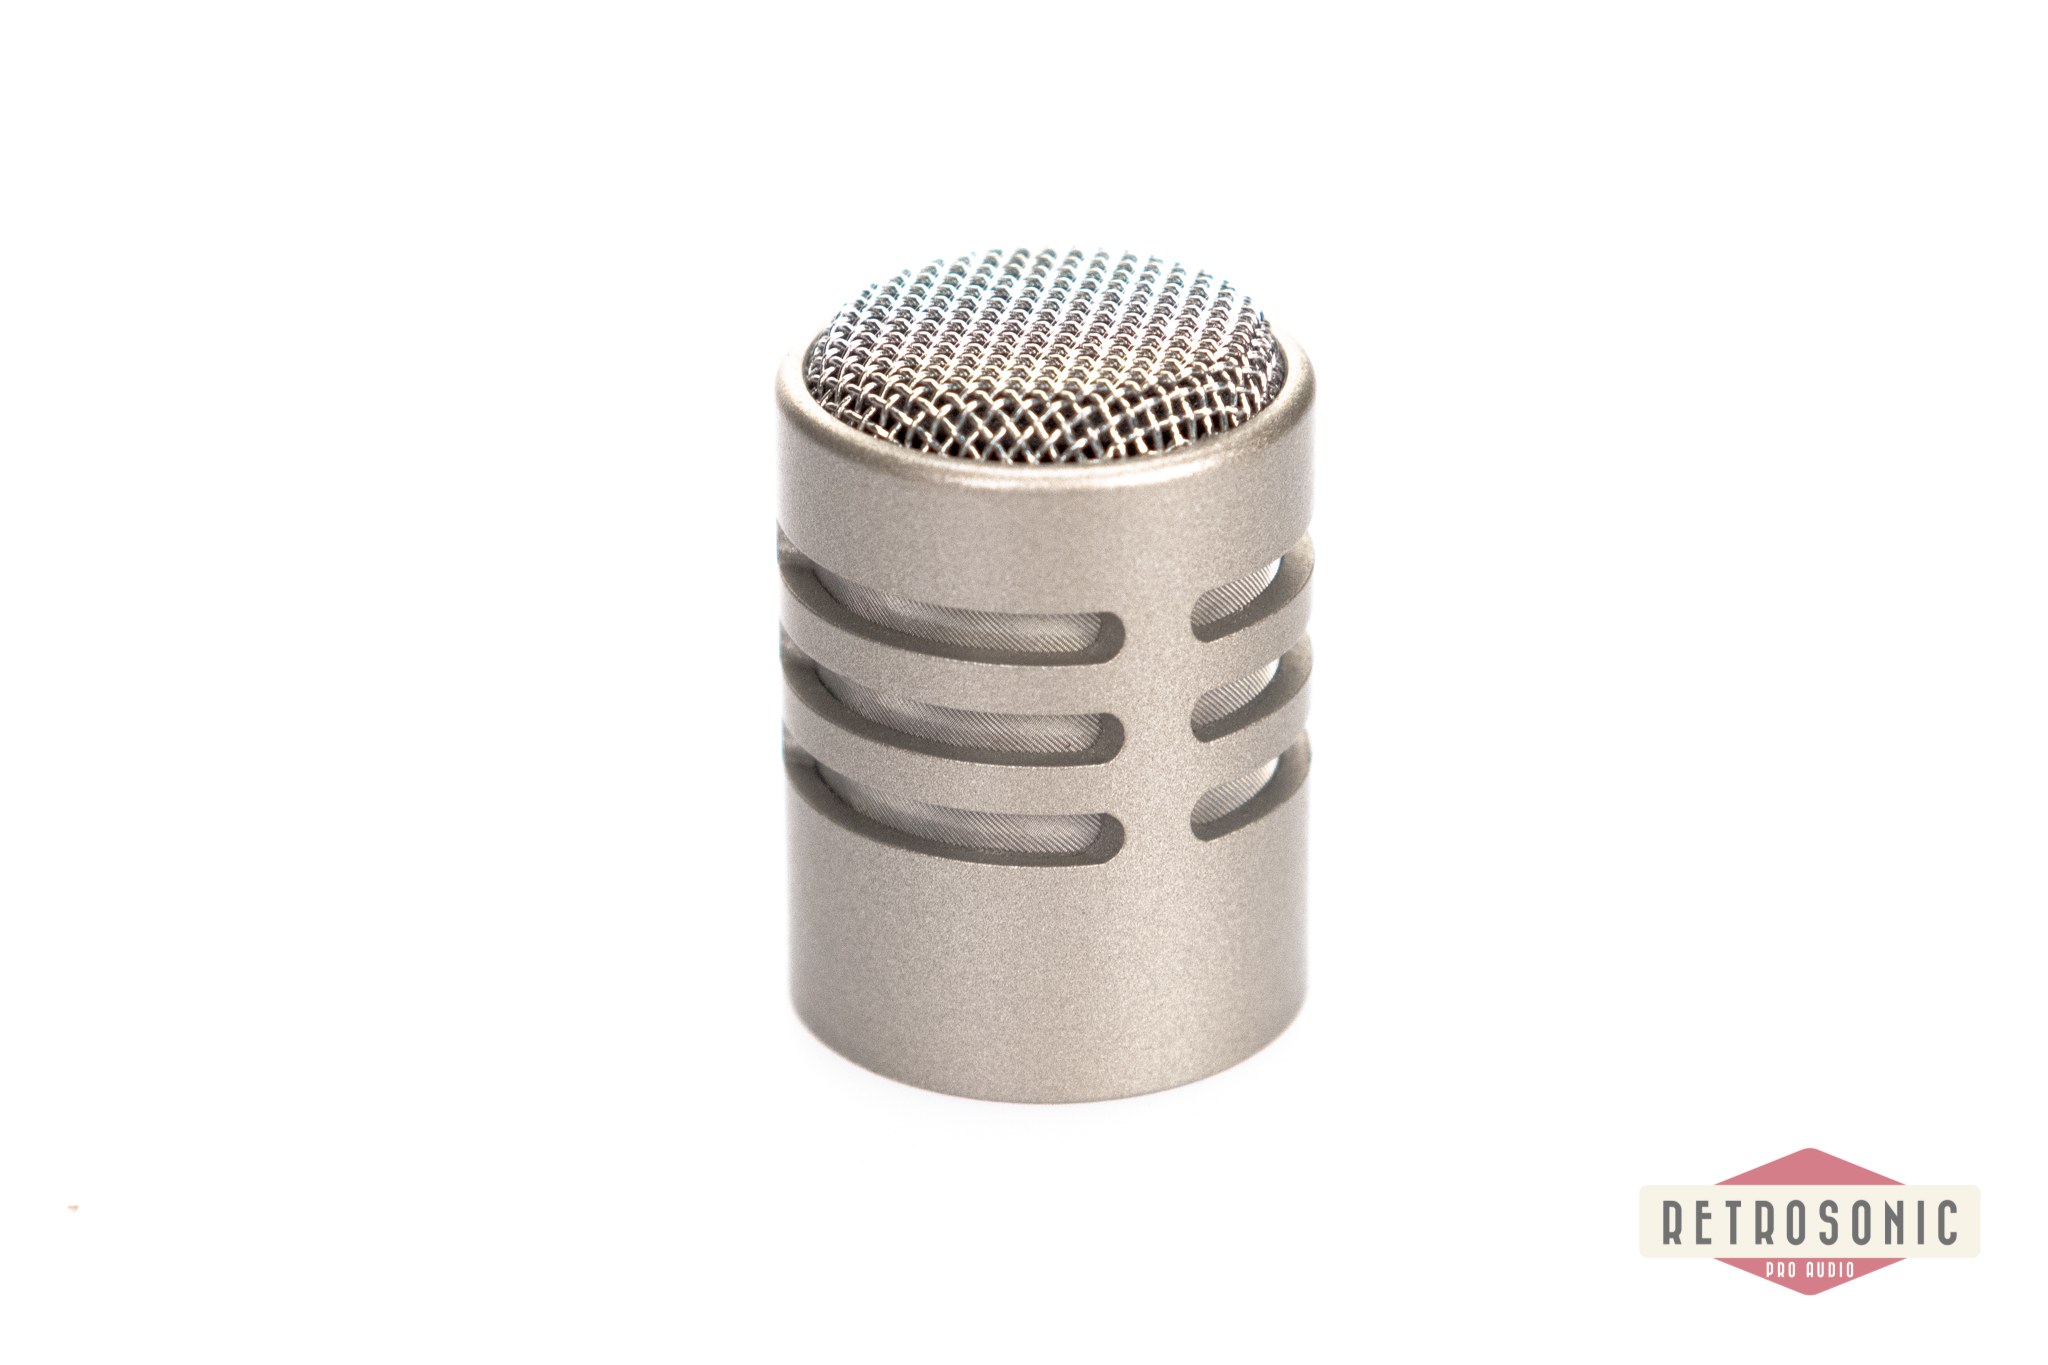 Shure SM-81-LC Condenser Microphone #1